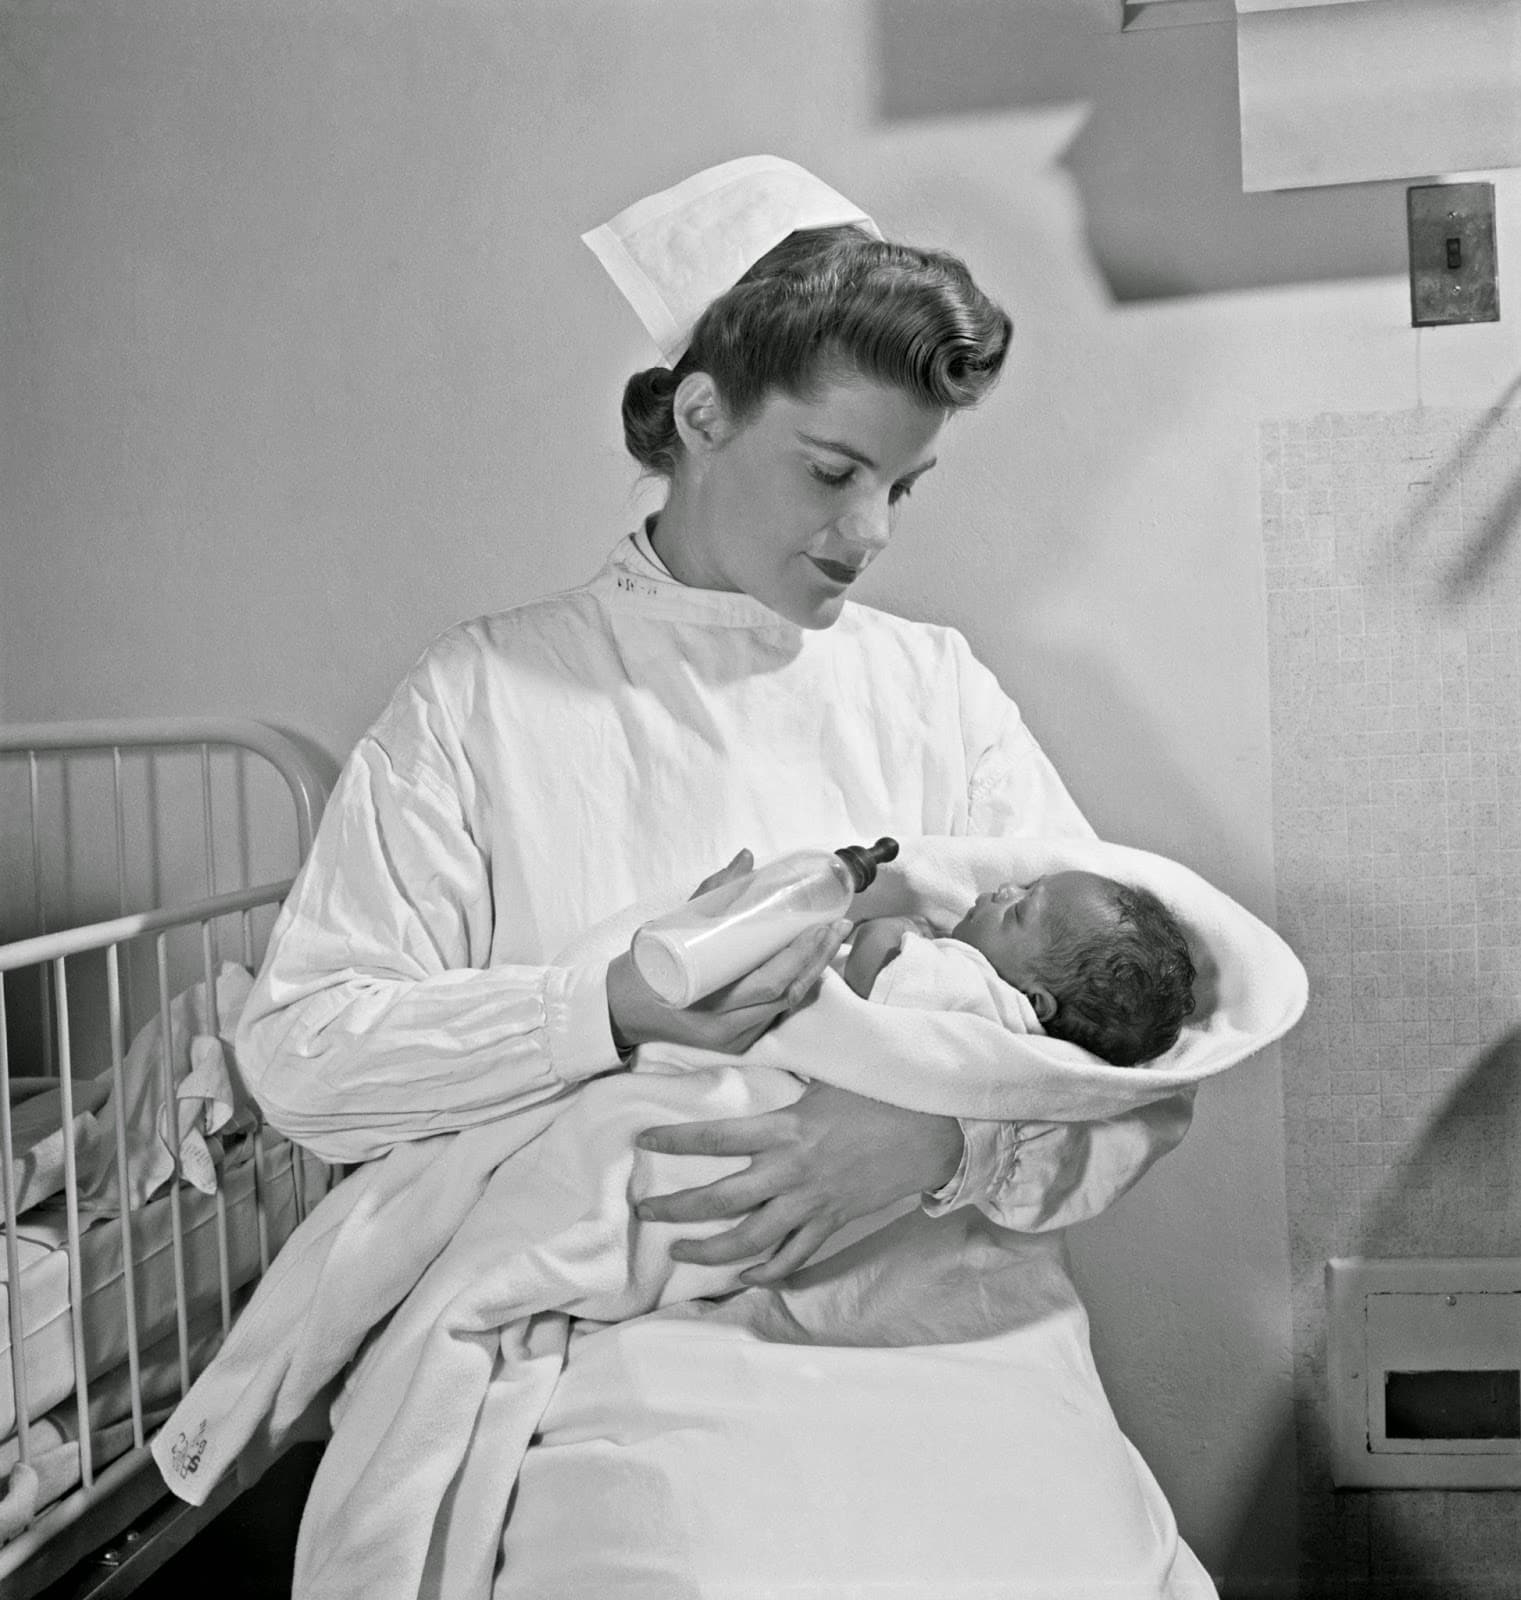 History in Photos: Nurse Training